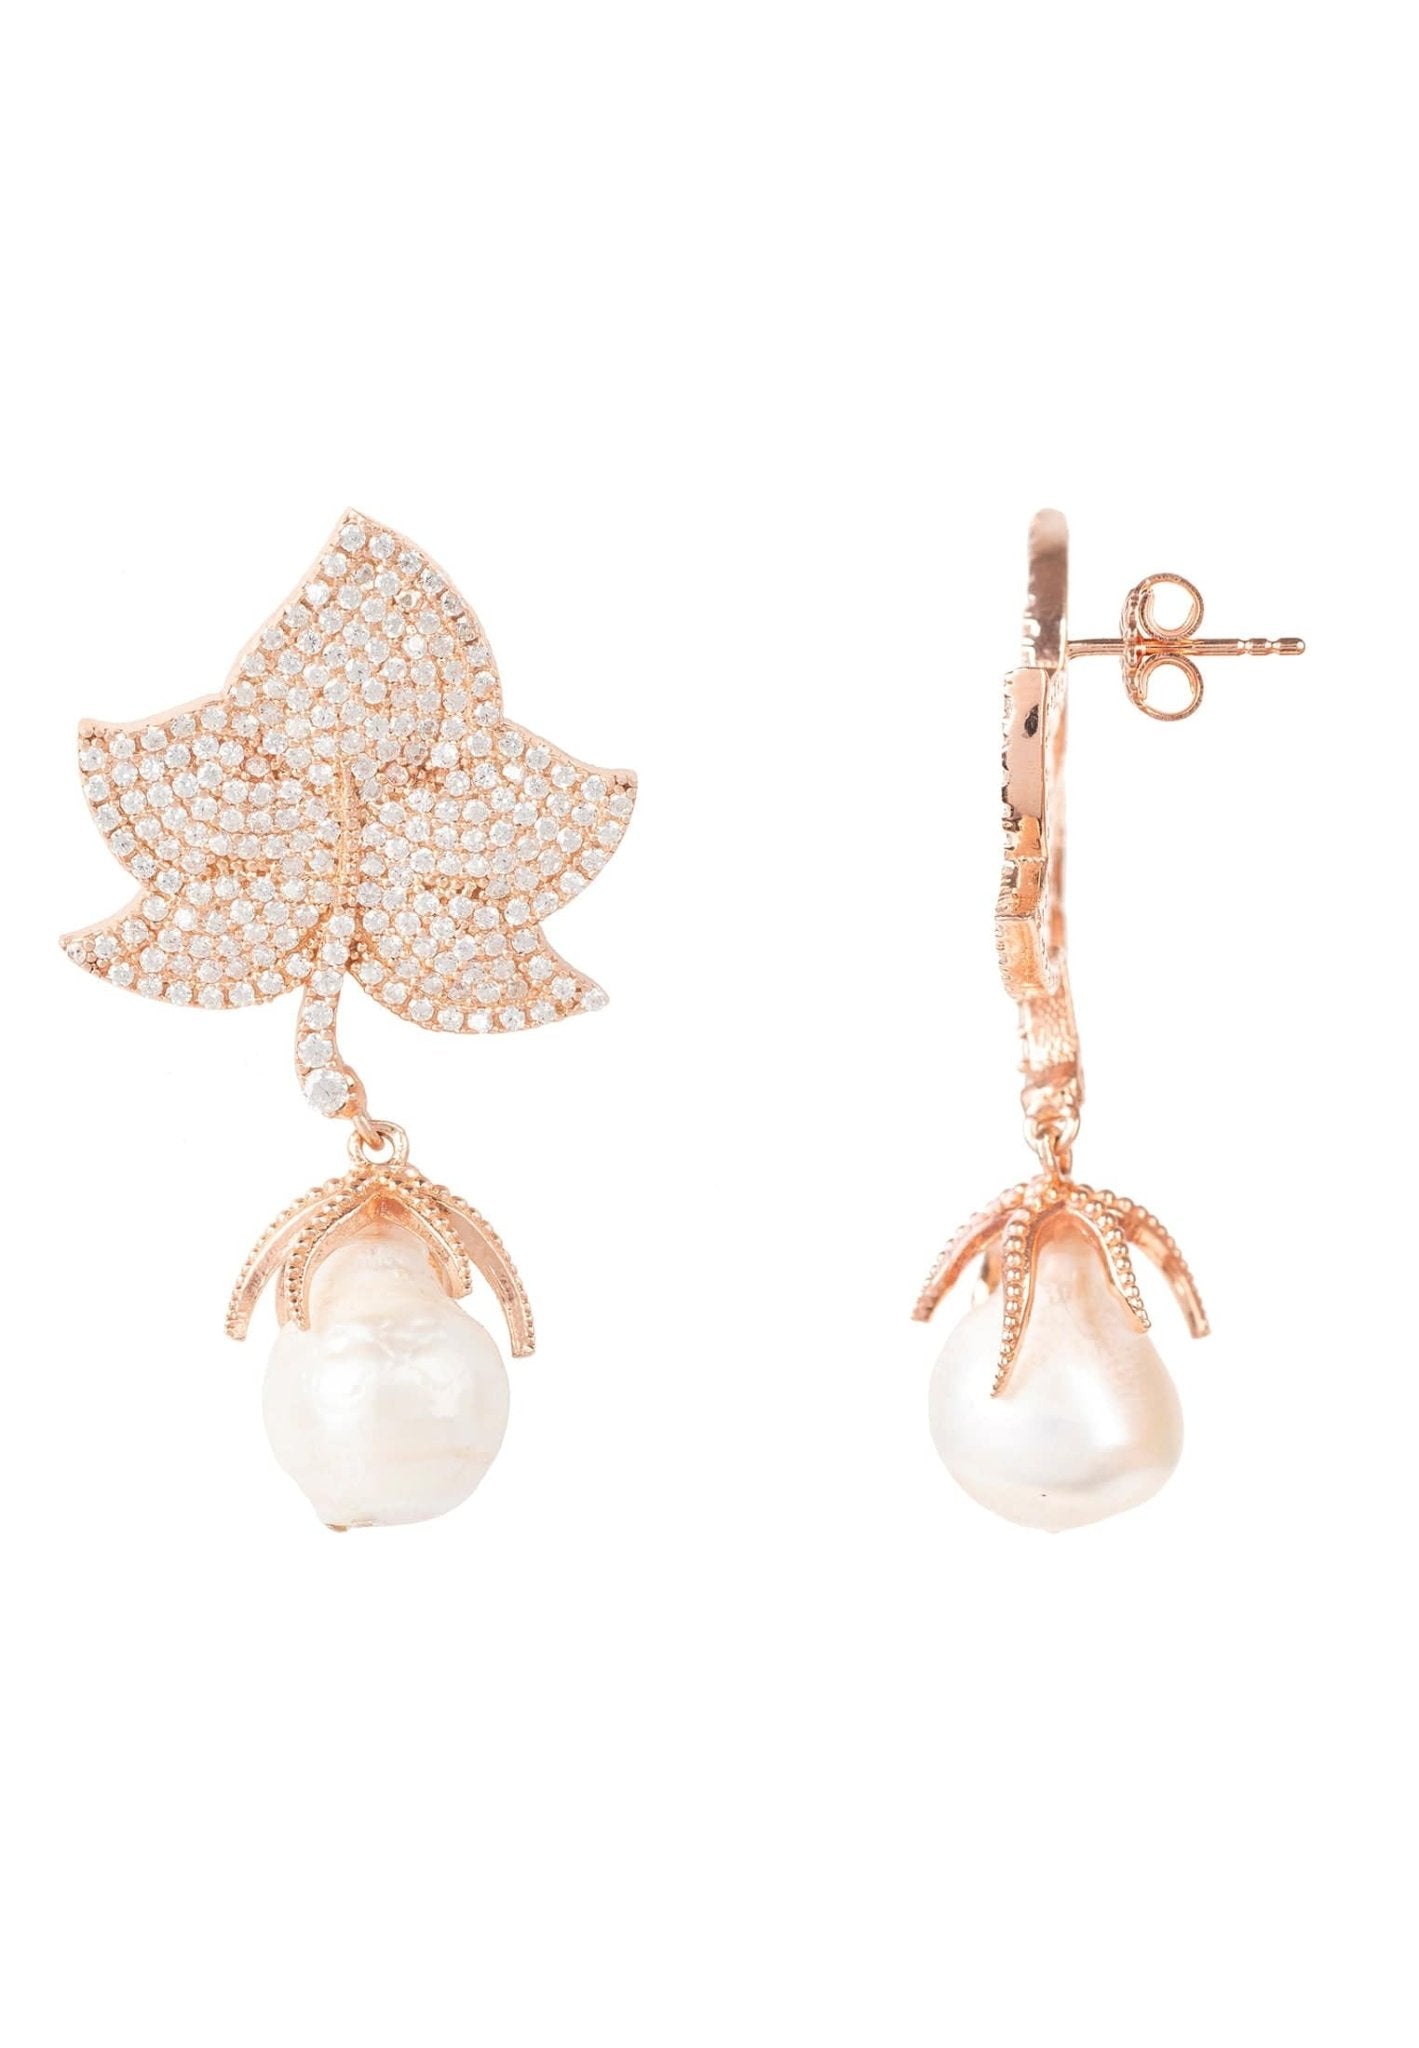 Baroque Pearl Leaf Earrings White Cz Rose Gold - LATELITA Earrings